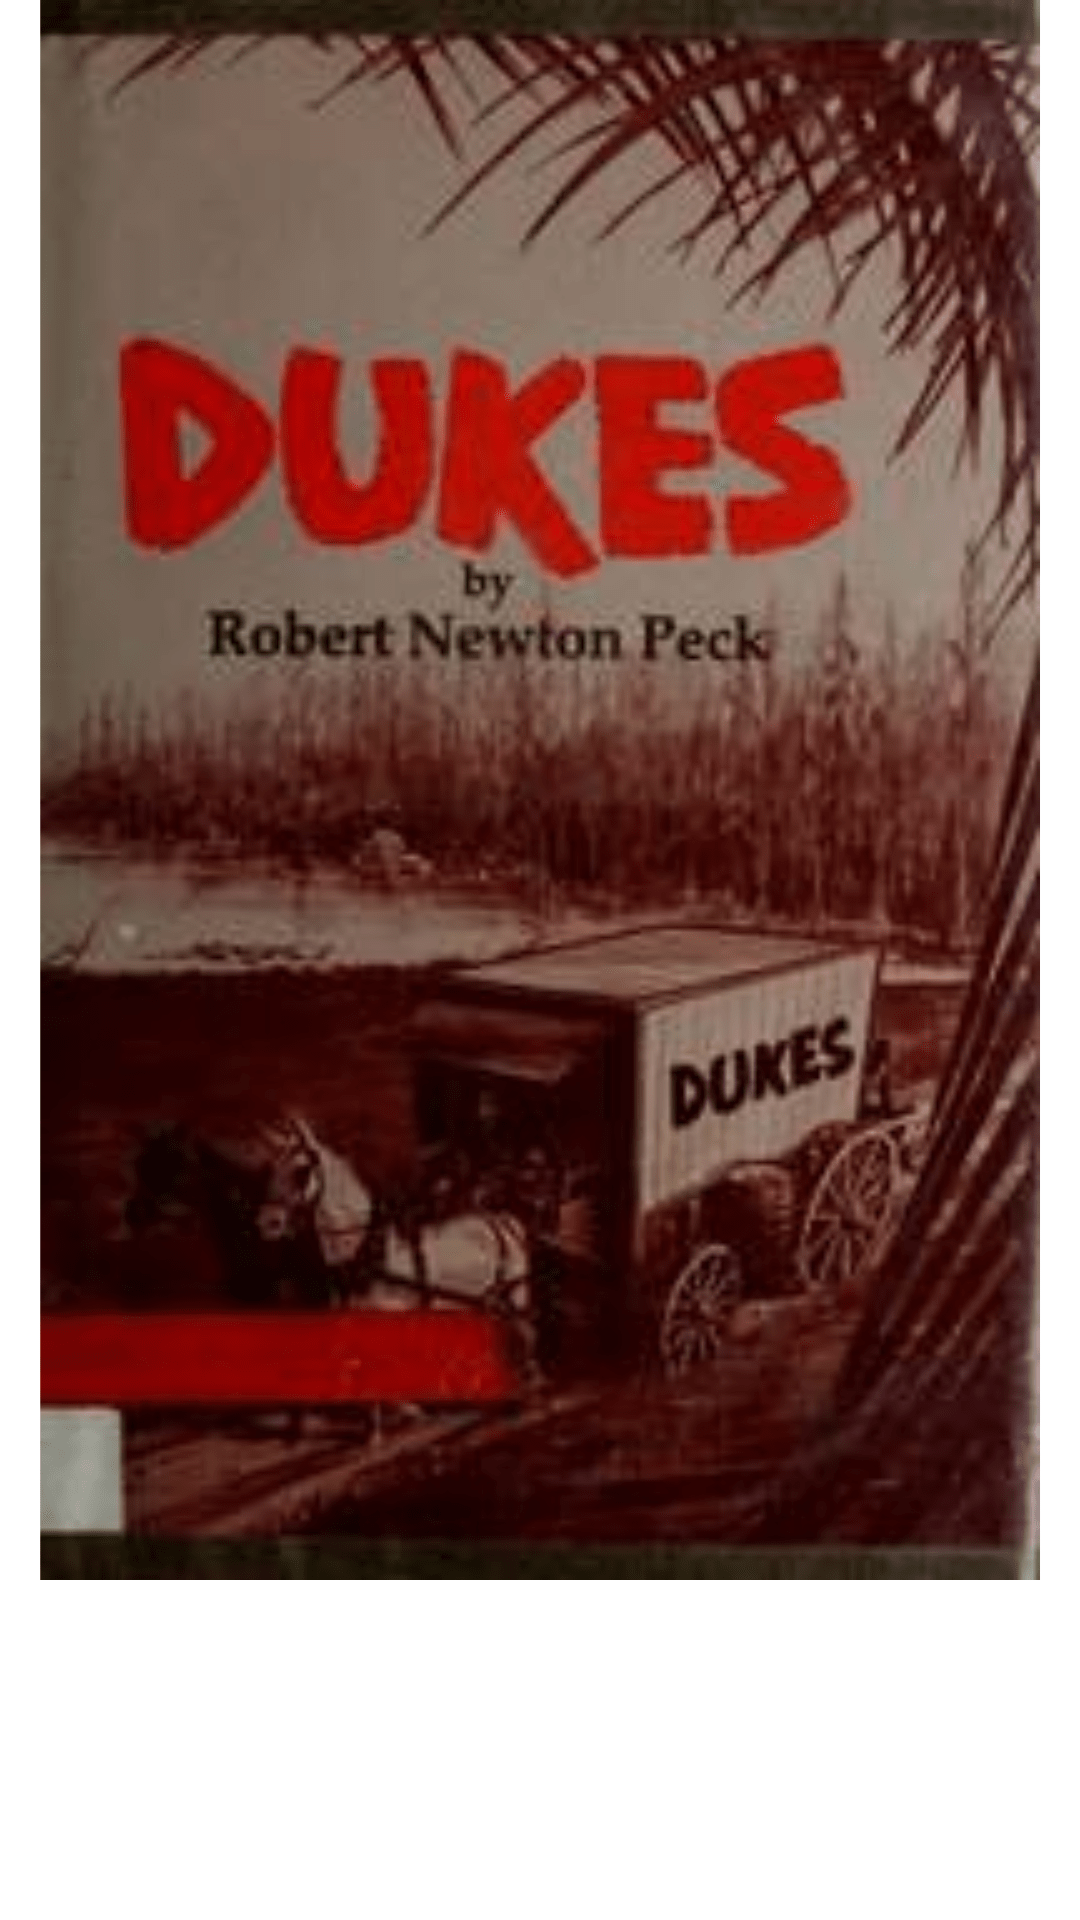 Dukes by Robert Newton Peck